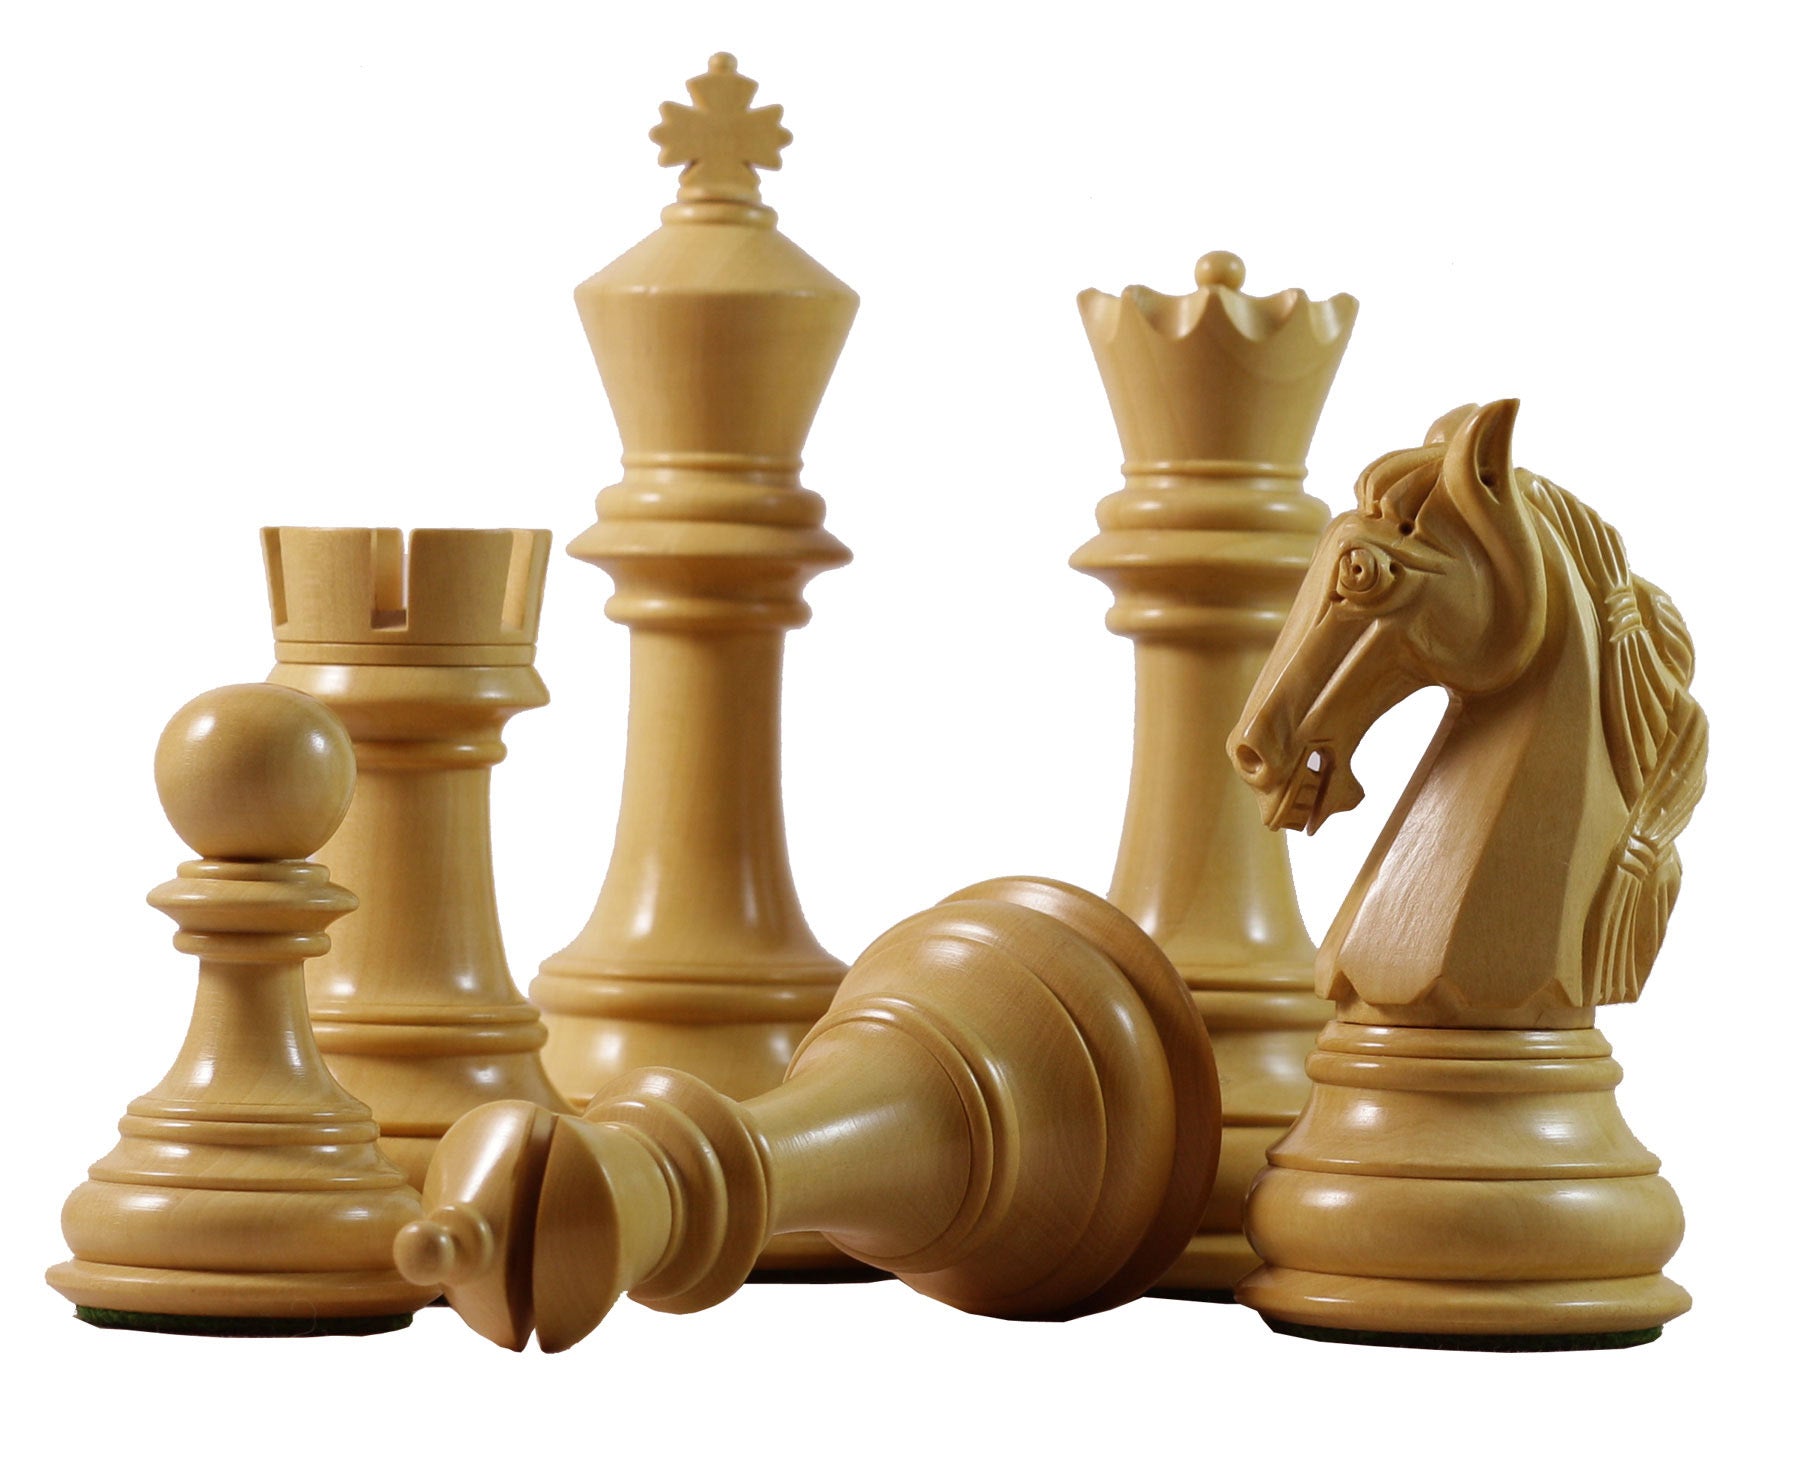 Columbian Series 4.5" Premium Staunton Chess Set in African Padouk and Box wood